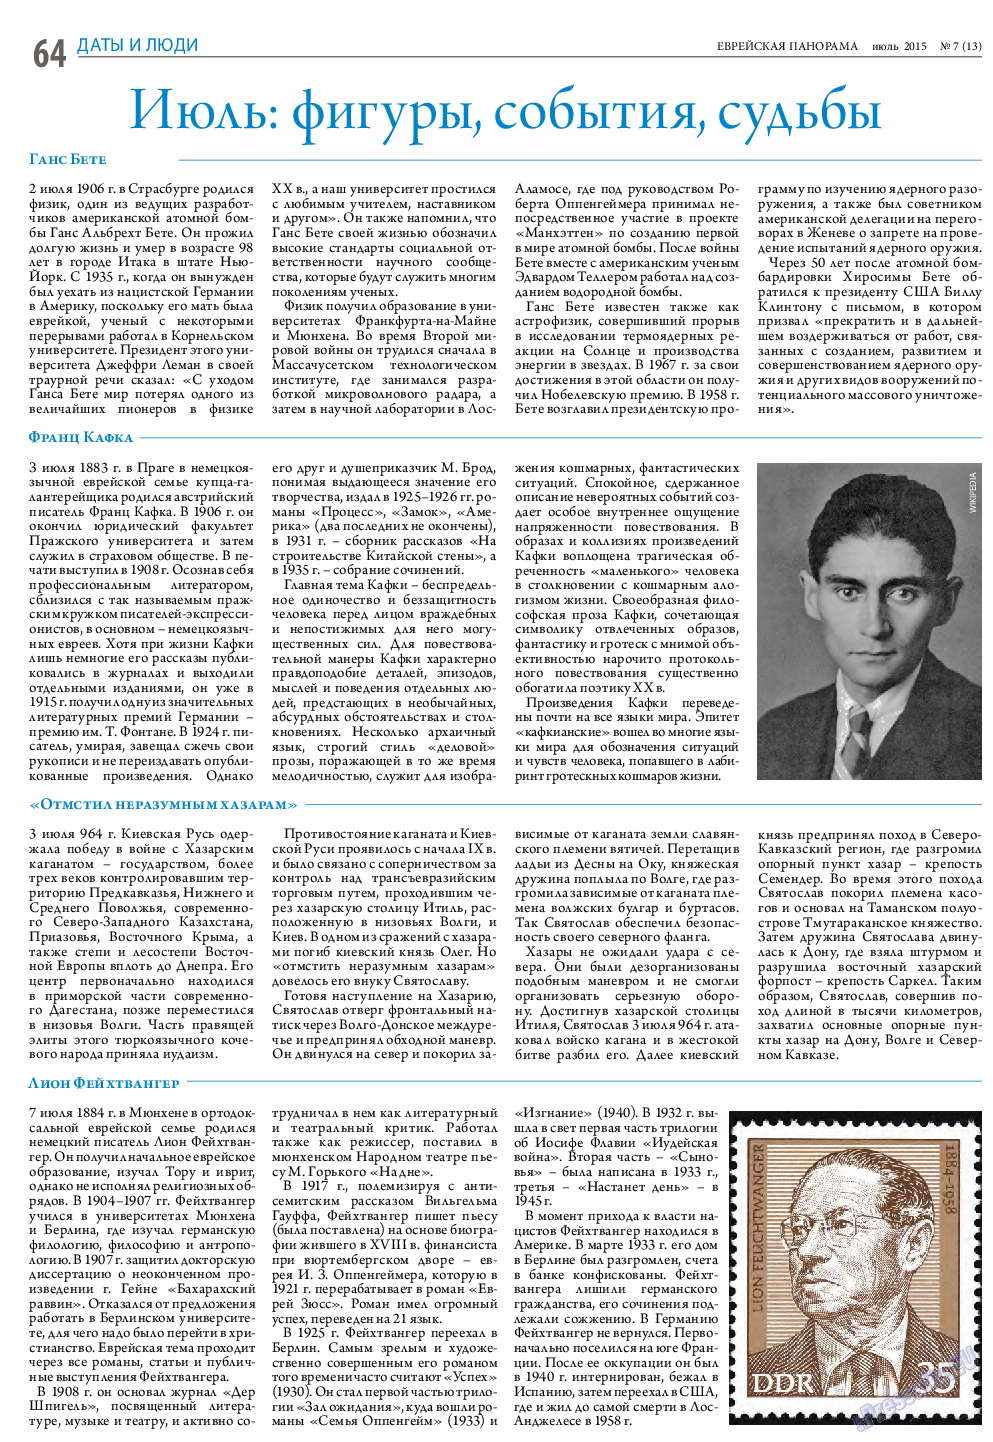 Еврейская панорама, газета. 2015 №7 стр.64